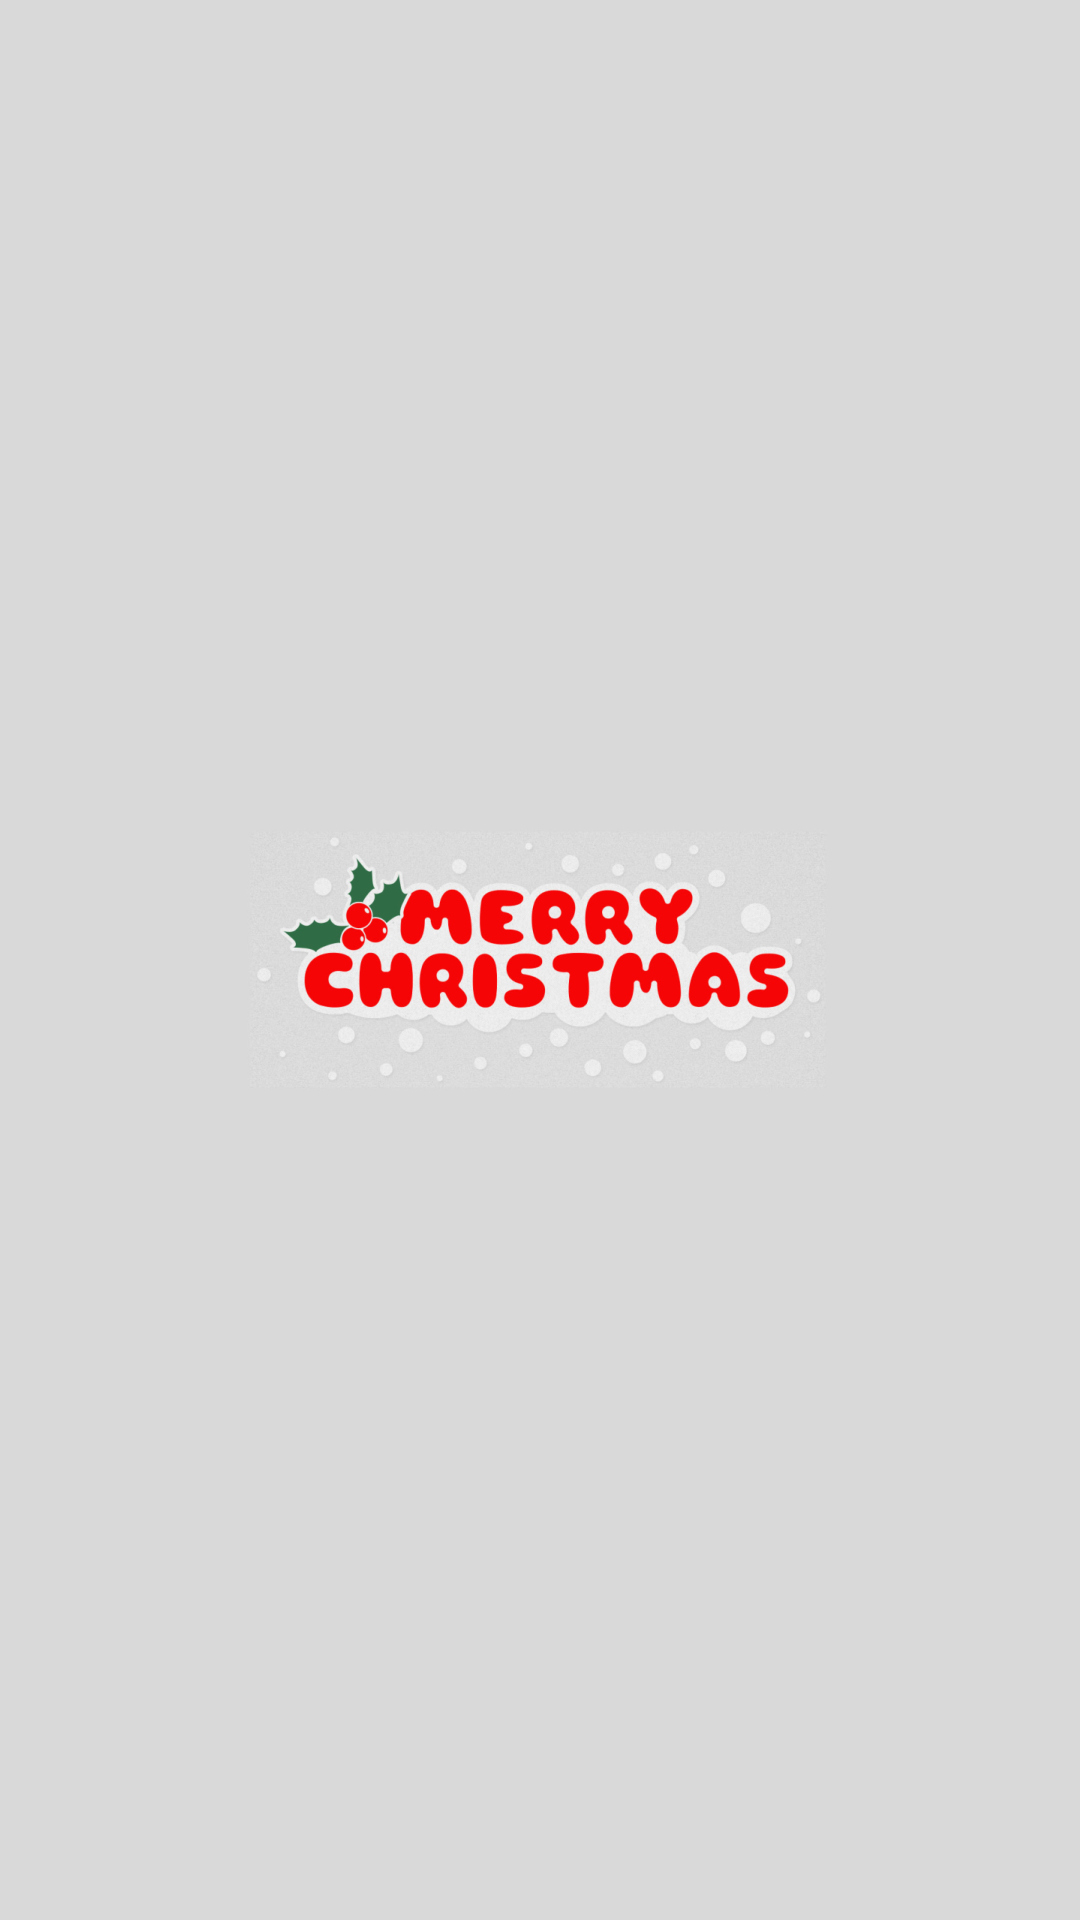 Merry Christmas Greeting wallpaper 1080x1920